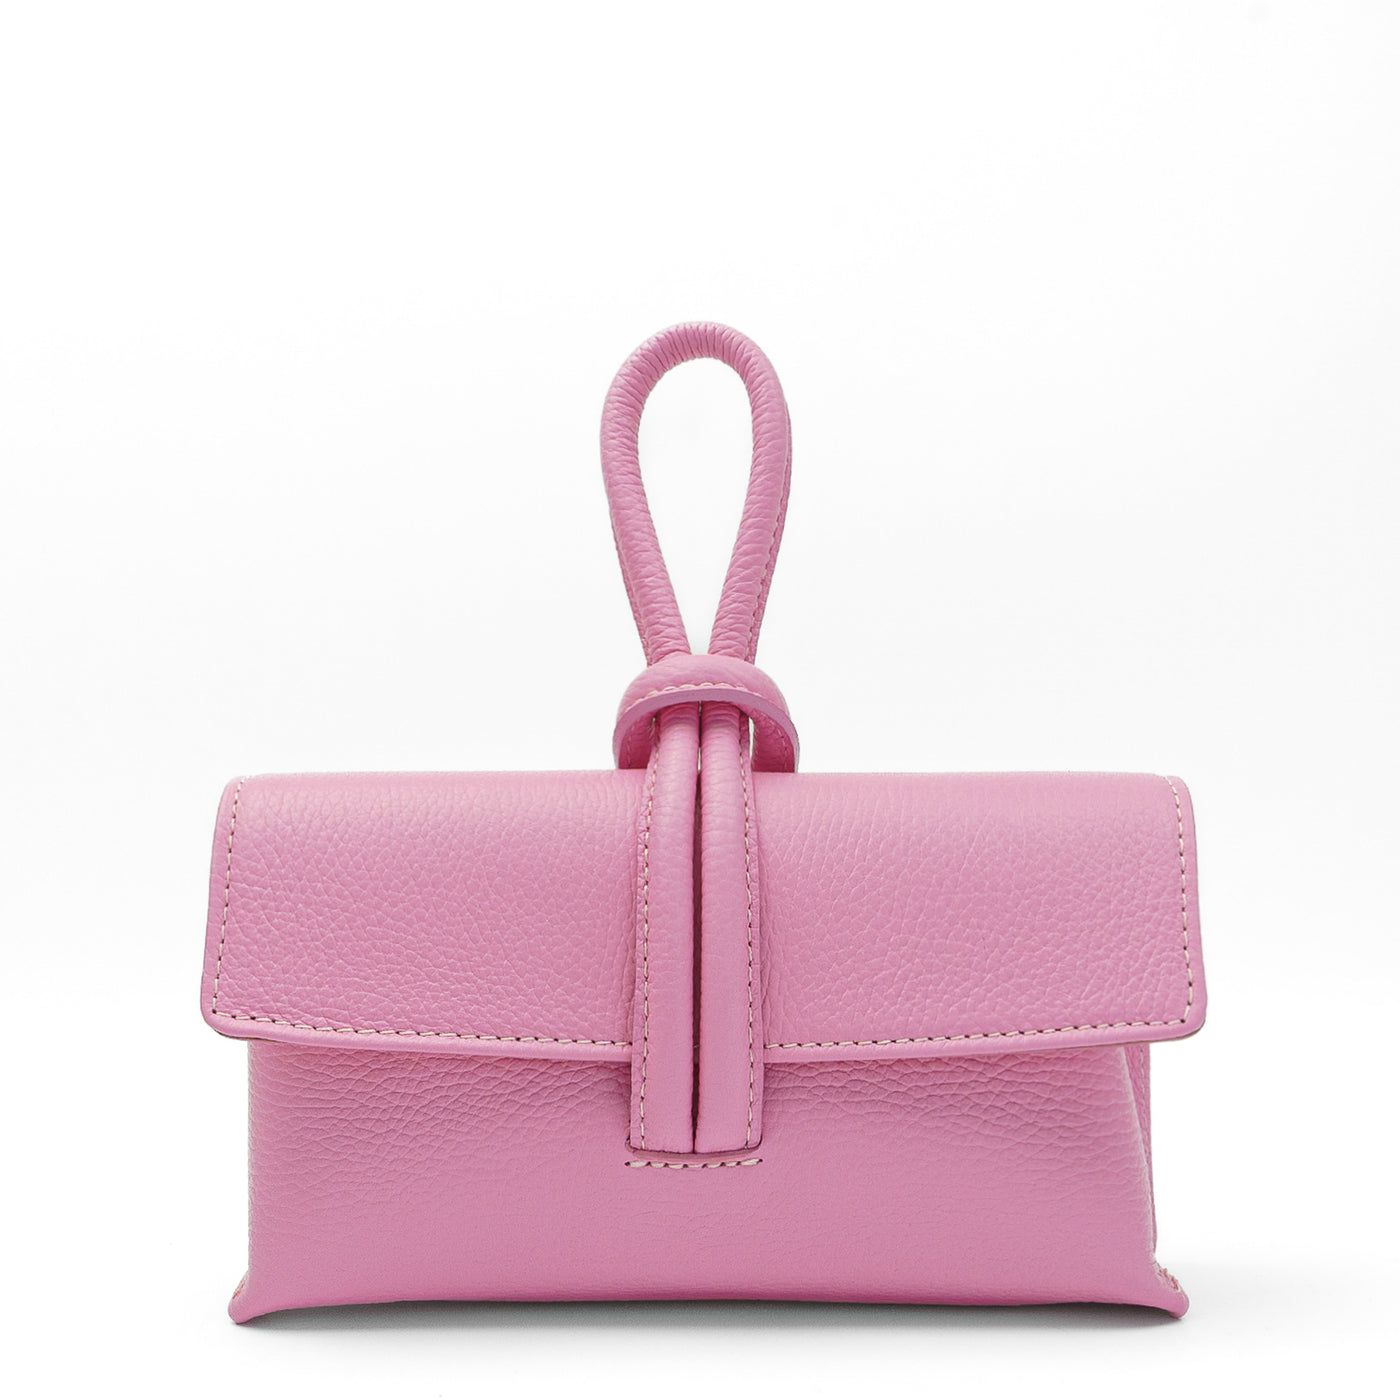 Leather bag "Barletta" Baby pink